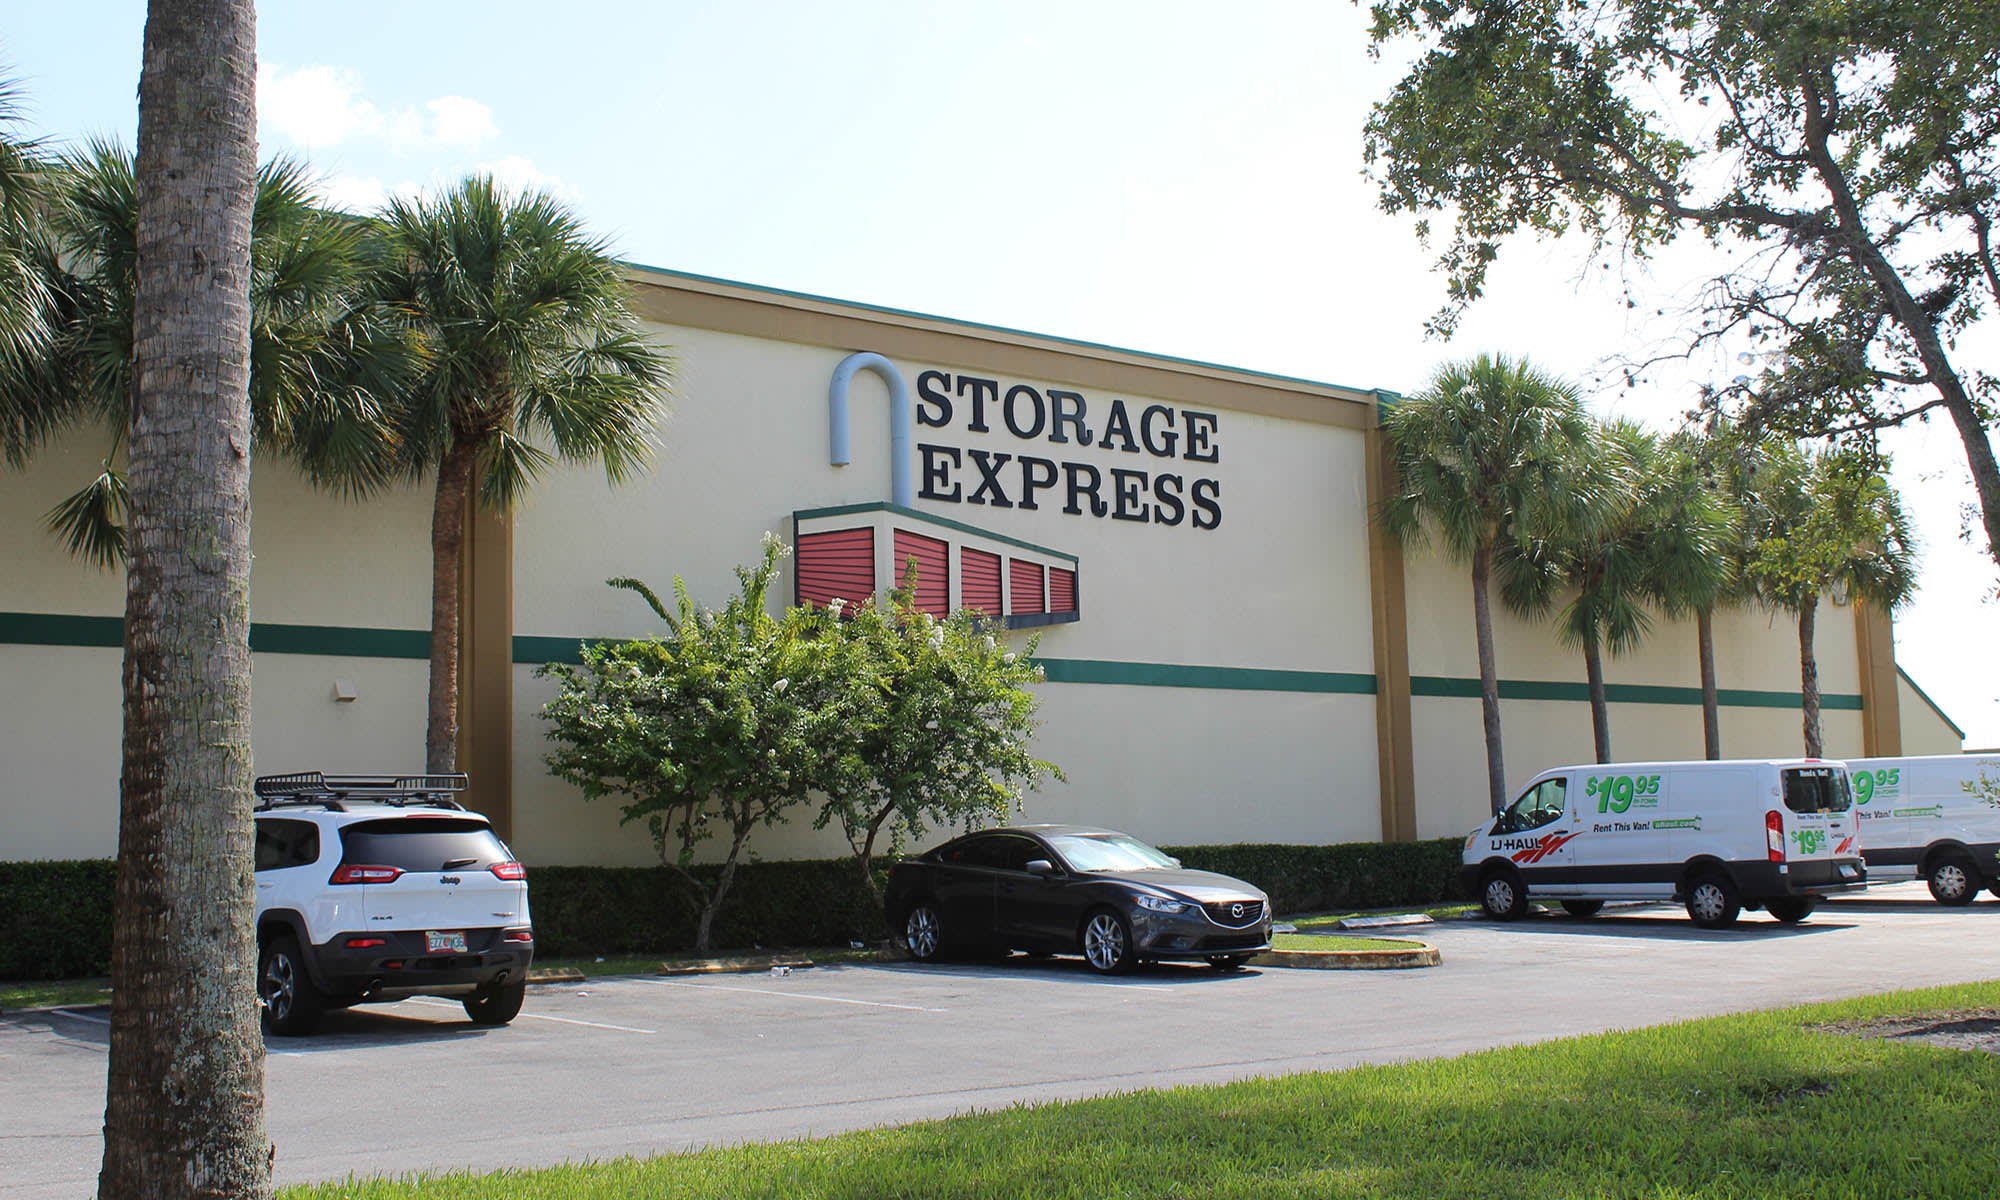 Self storage in Lauderhill FL